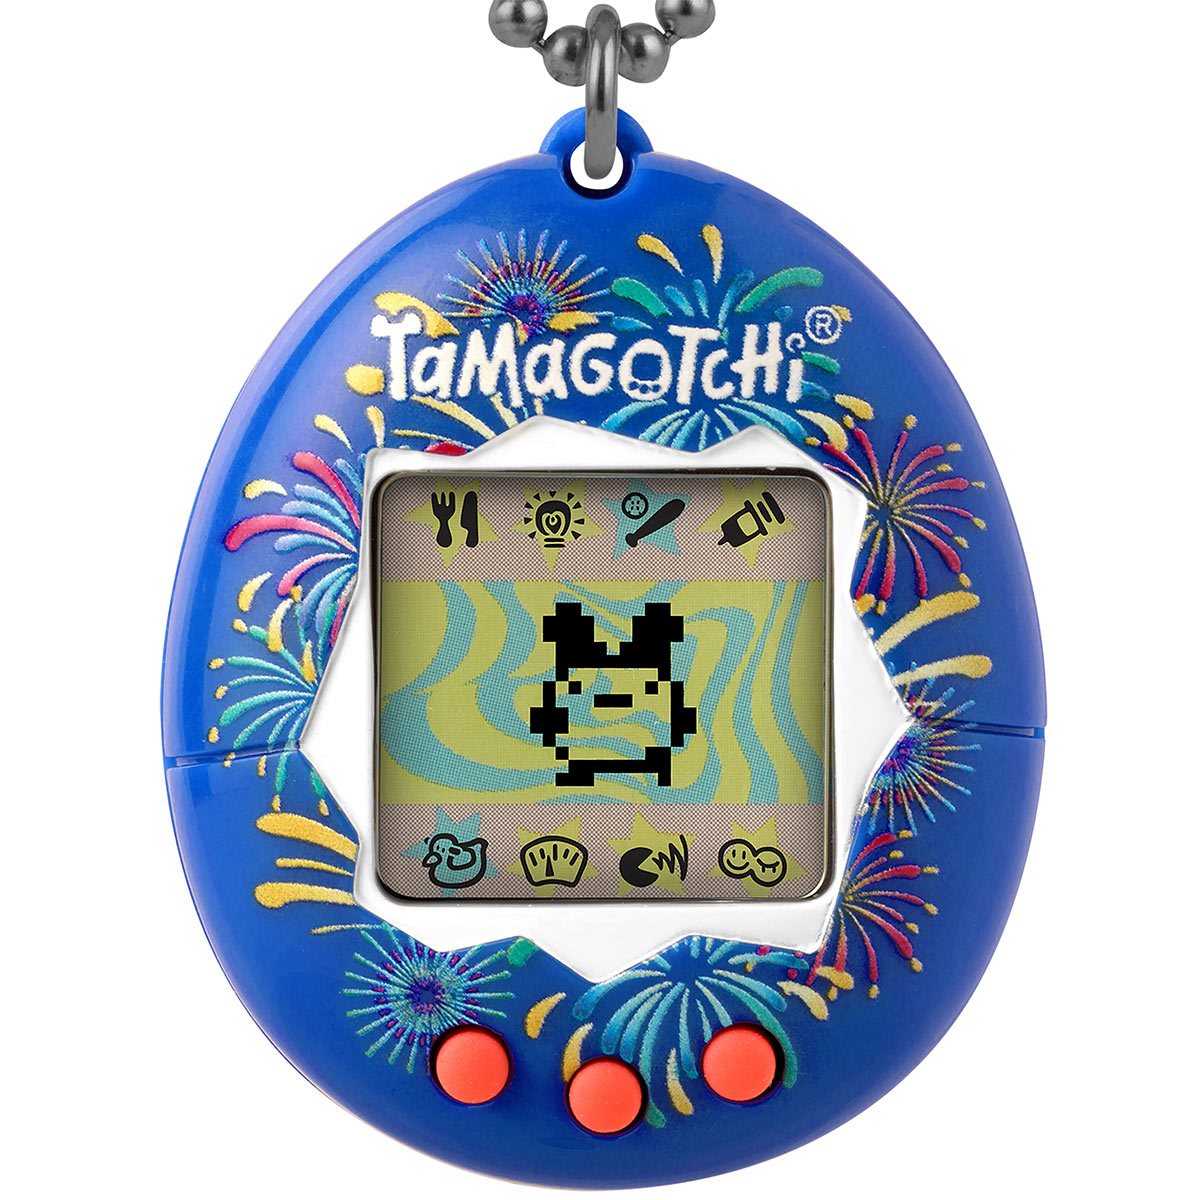 Bandai Tamagotchi Original Classic Digital Pet Pink and Blue Sky Gen 2 for  sale online